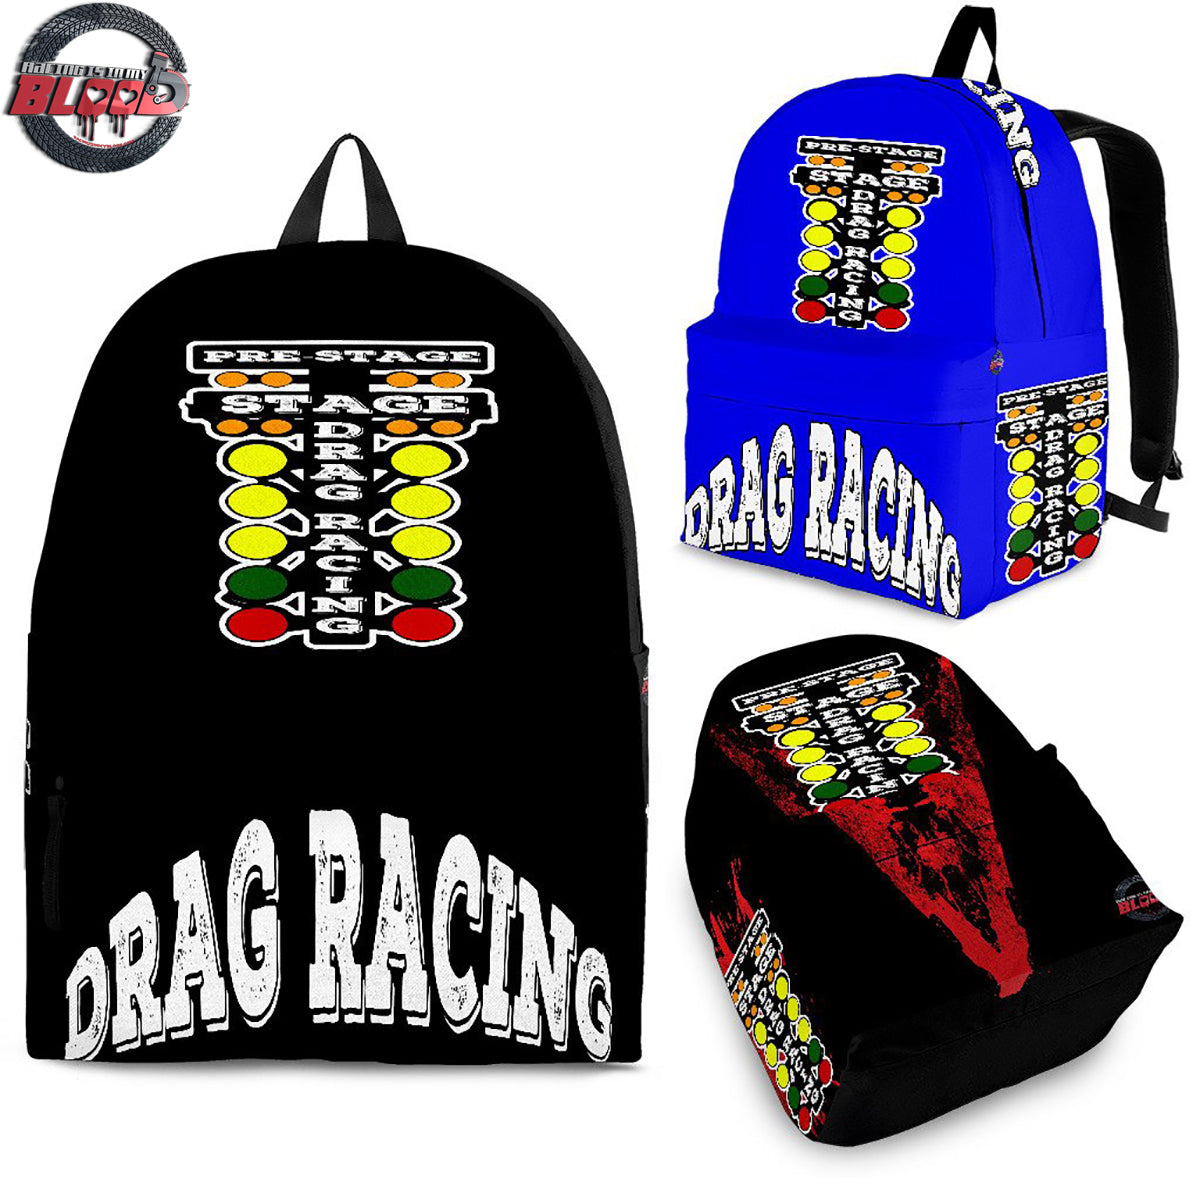 Drag Racing Backpacks